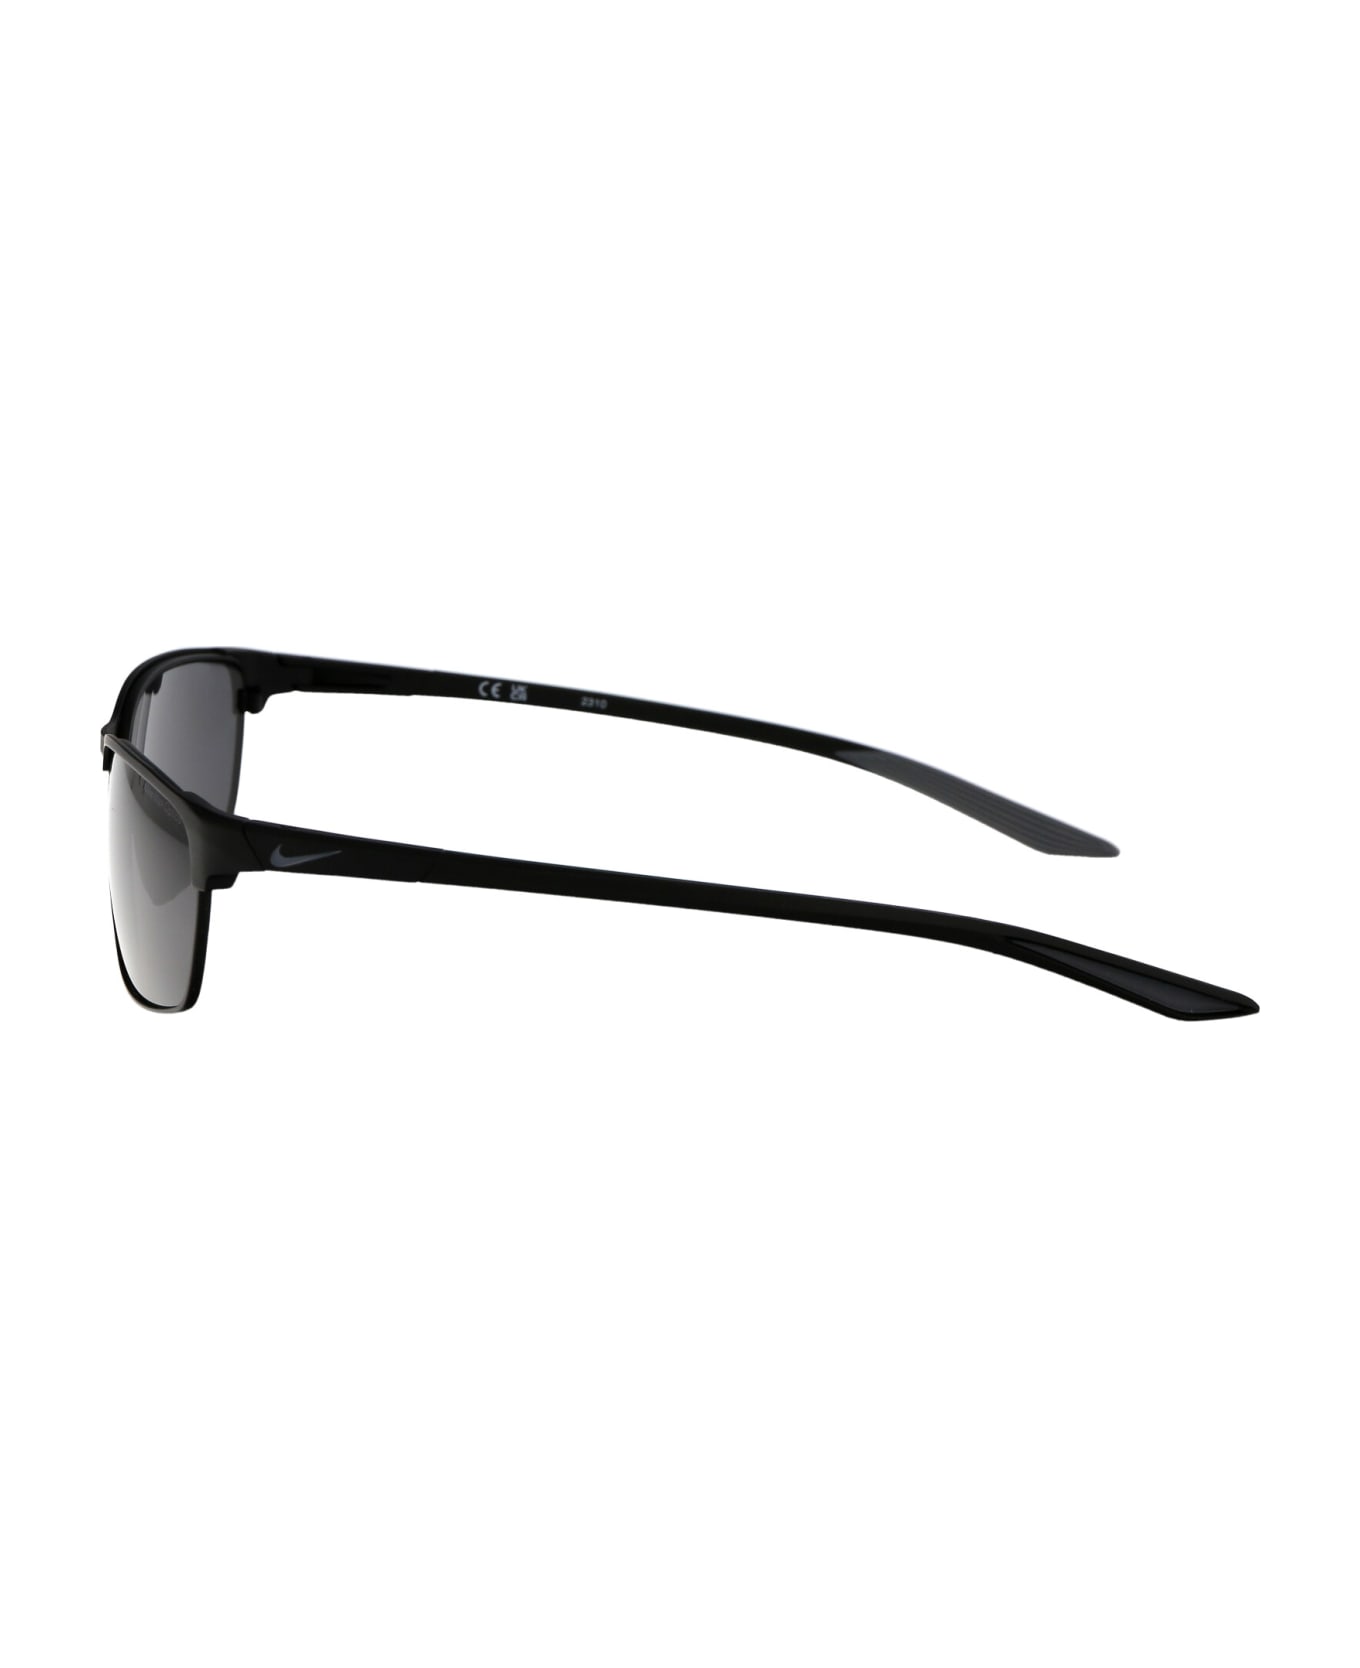 Nike Modern Metal Sunglasses - 010 DARK GREY SATIN BLACK